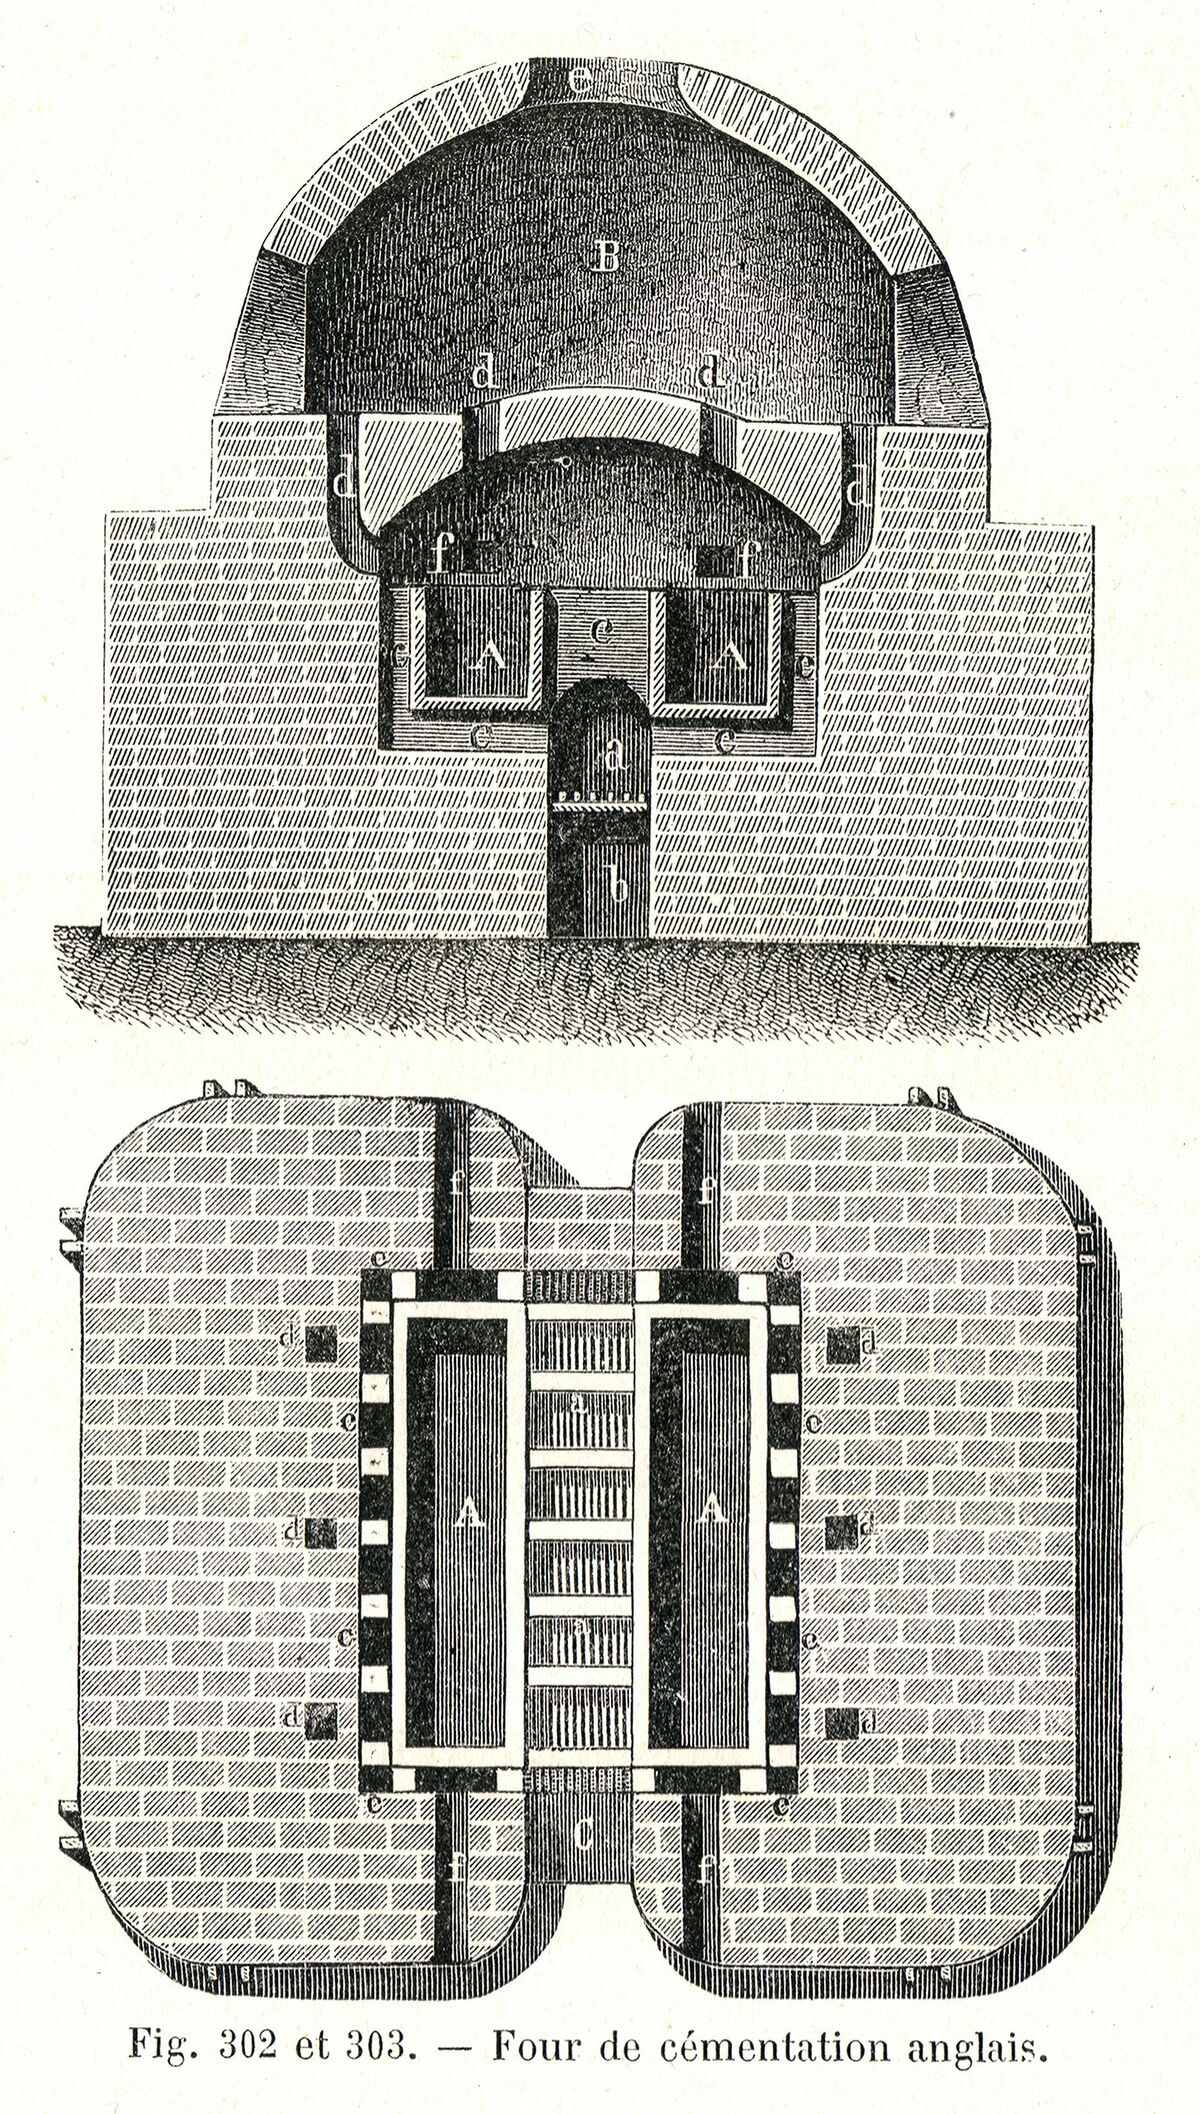 GFD 3/67: English blister steel kiln (illustration from Ledebur's Handbuch zur Metallurgie, 1895)